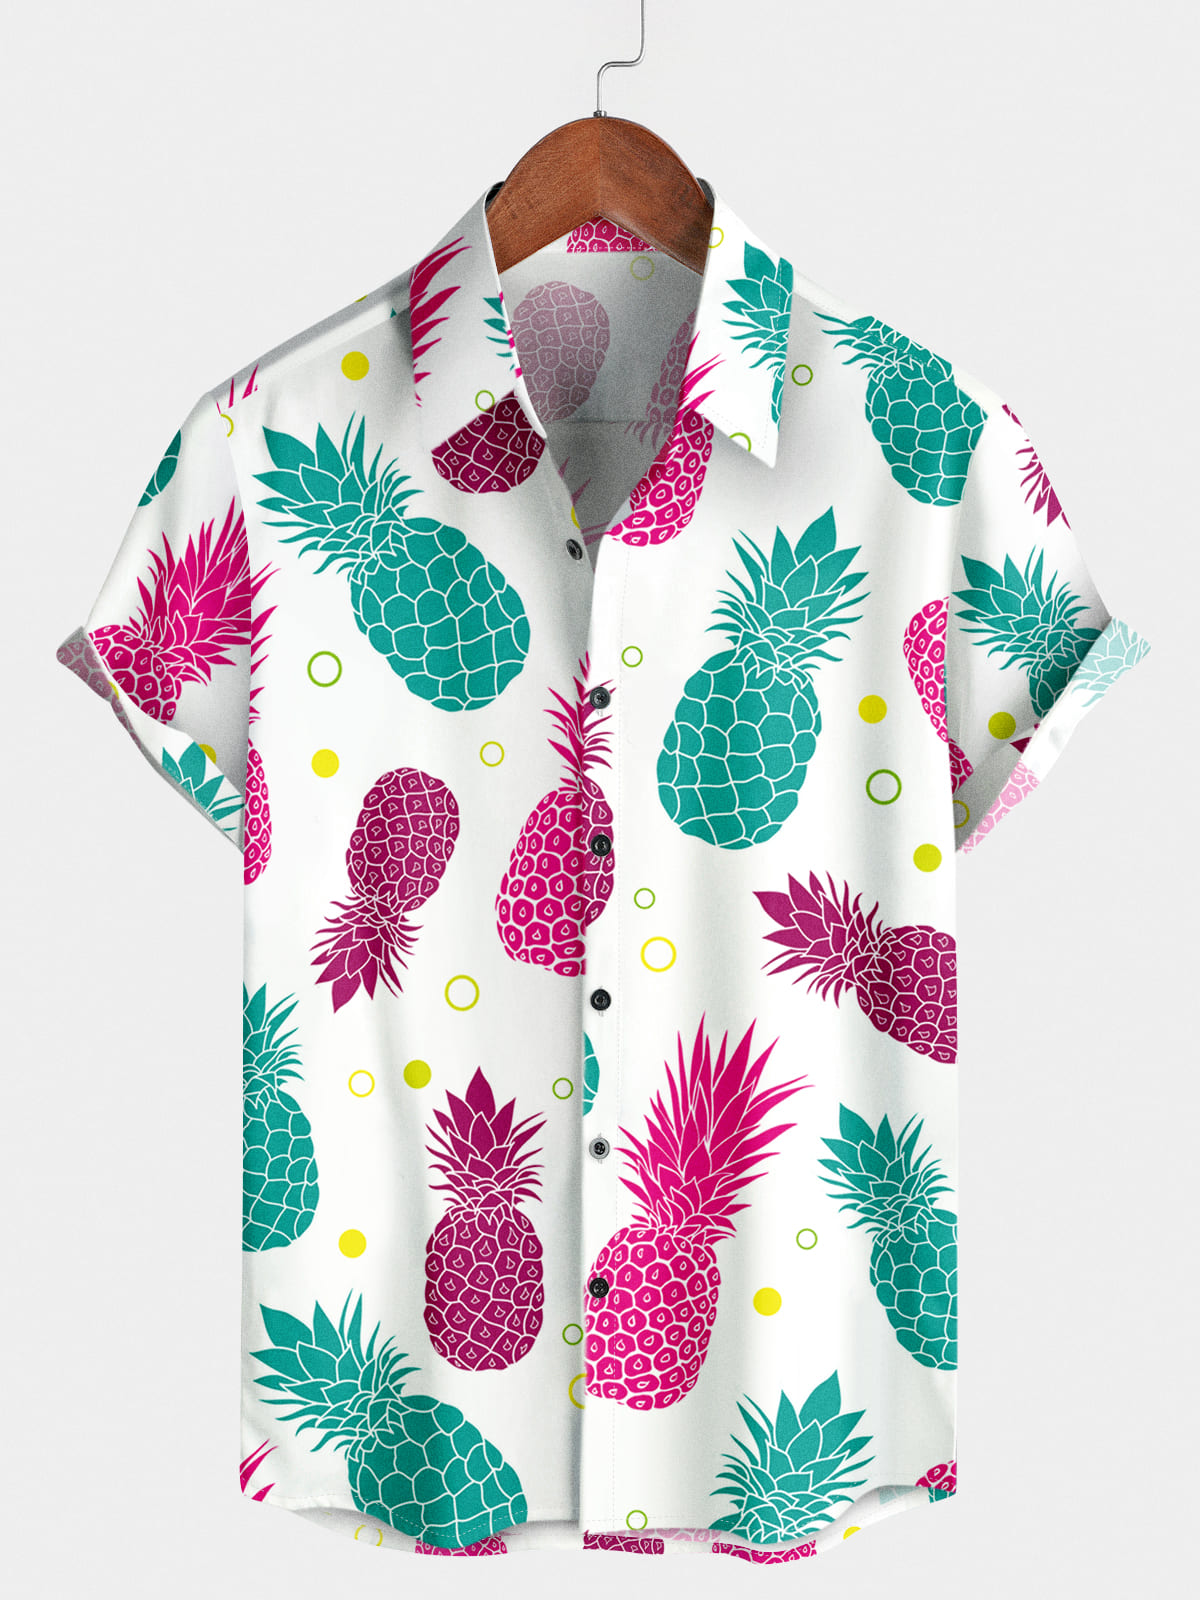 Men's Pineapple Holiday Short Sleeve Shirt